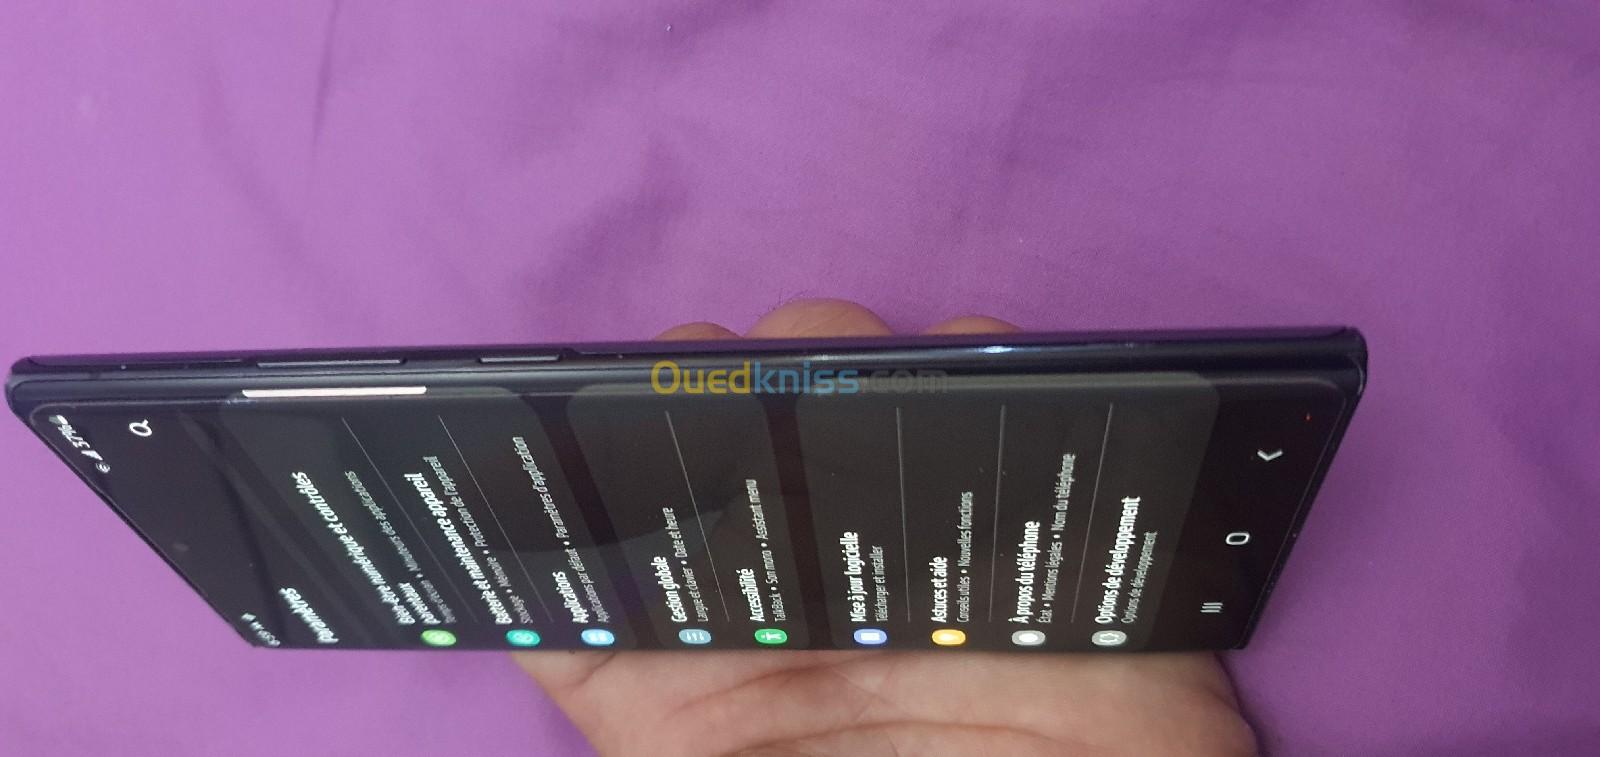 Samsung Galaxy Note 20 Ultra (N986U1) Snapdragon, Double Puces, Mémoire 512GB, RAM 12GB